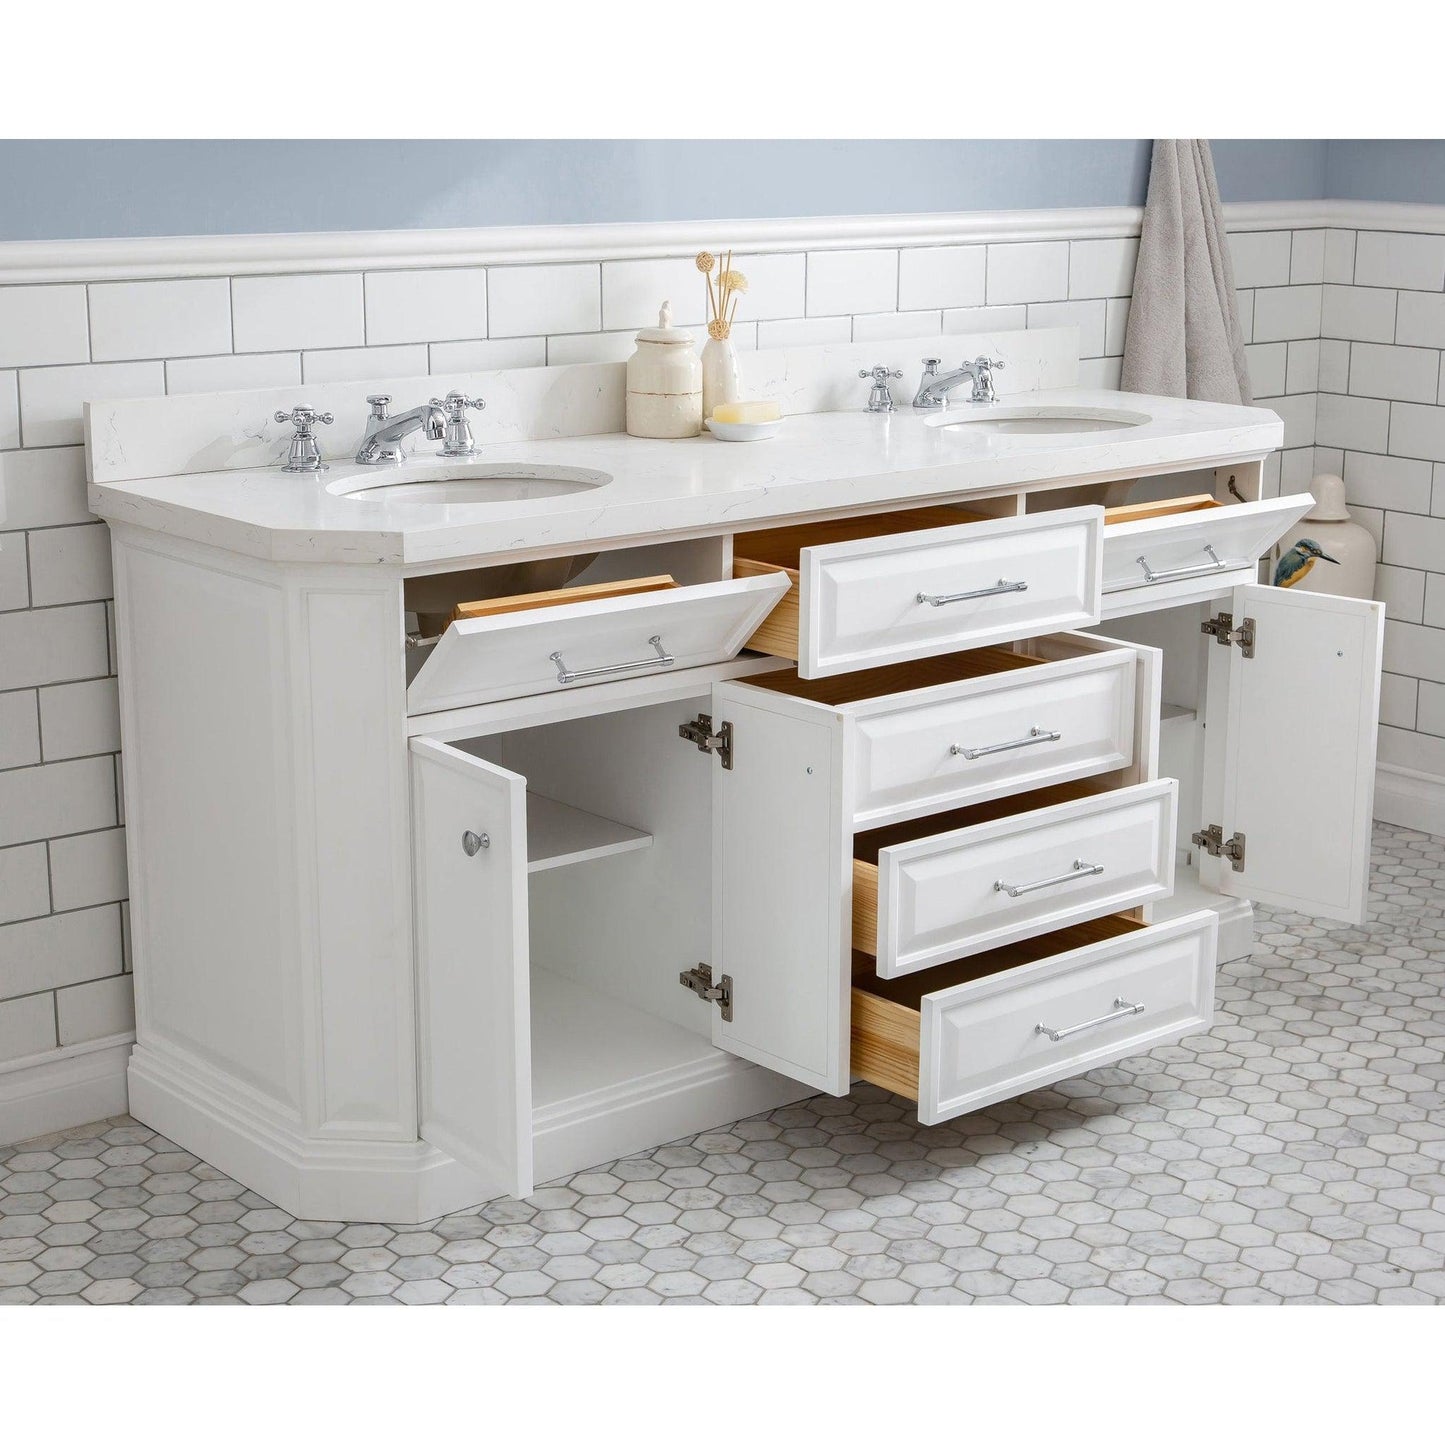 Water Creation Palace 72" Quartz Carrara Pure White Bathroom Vanity Set With Hardware in Chrome Finish